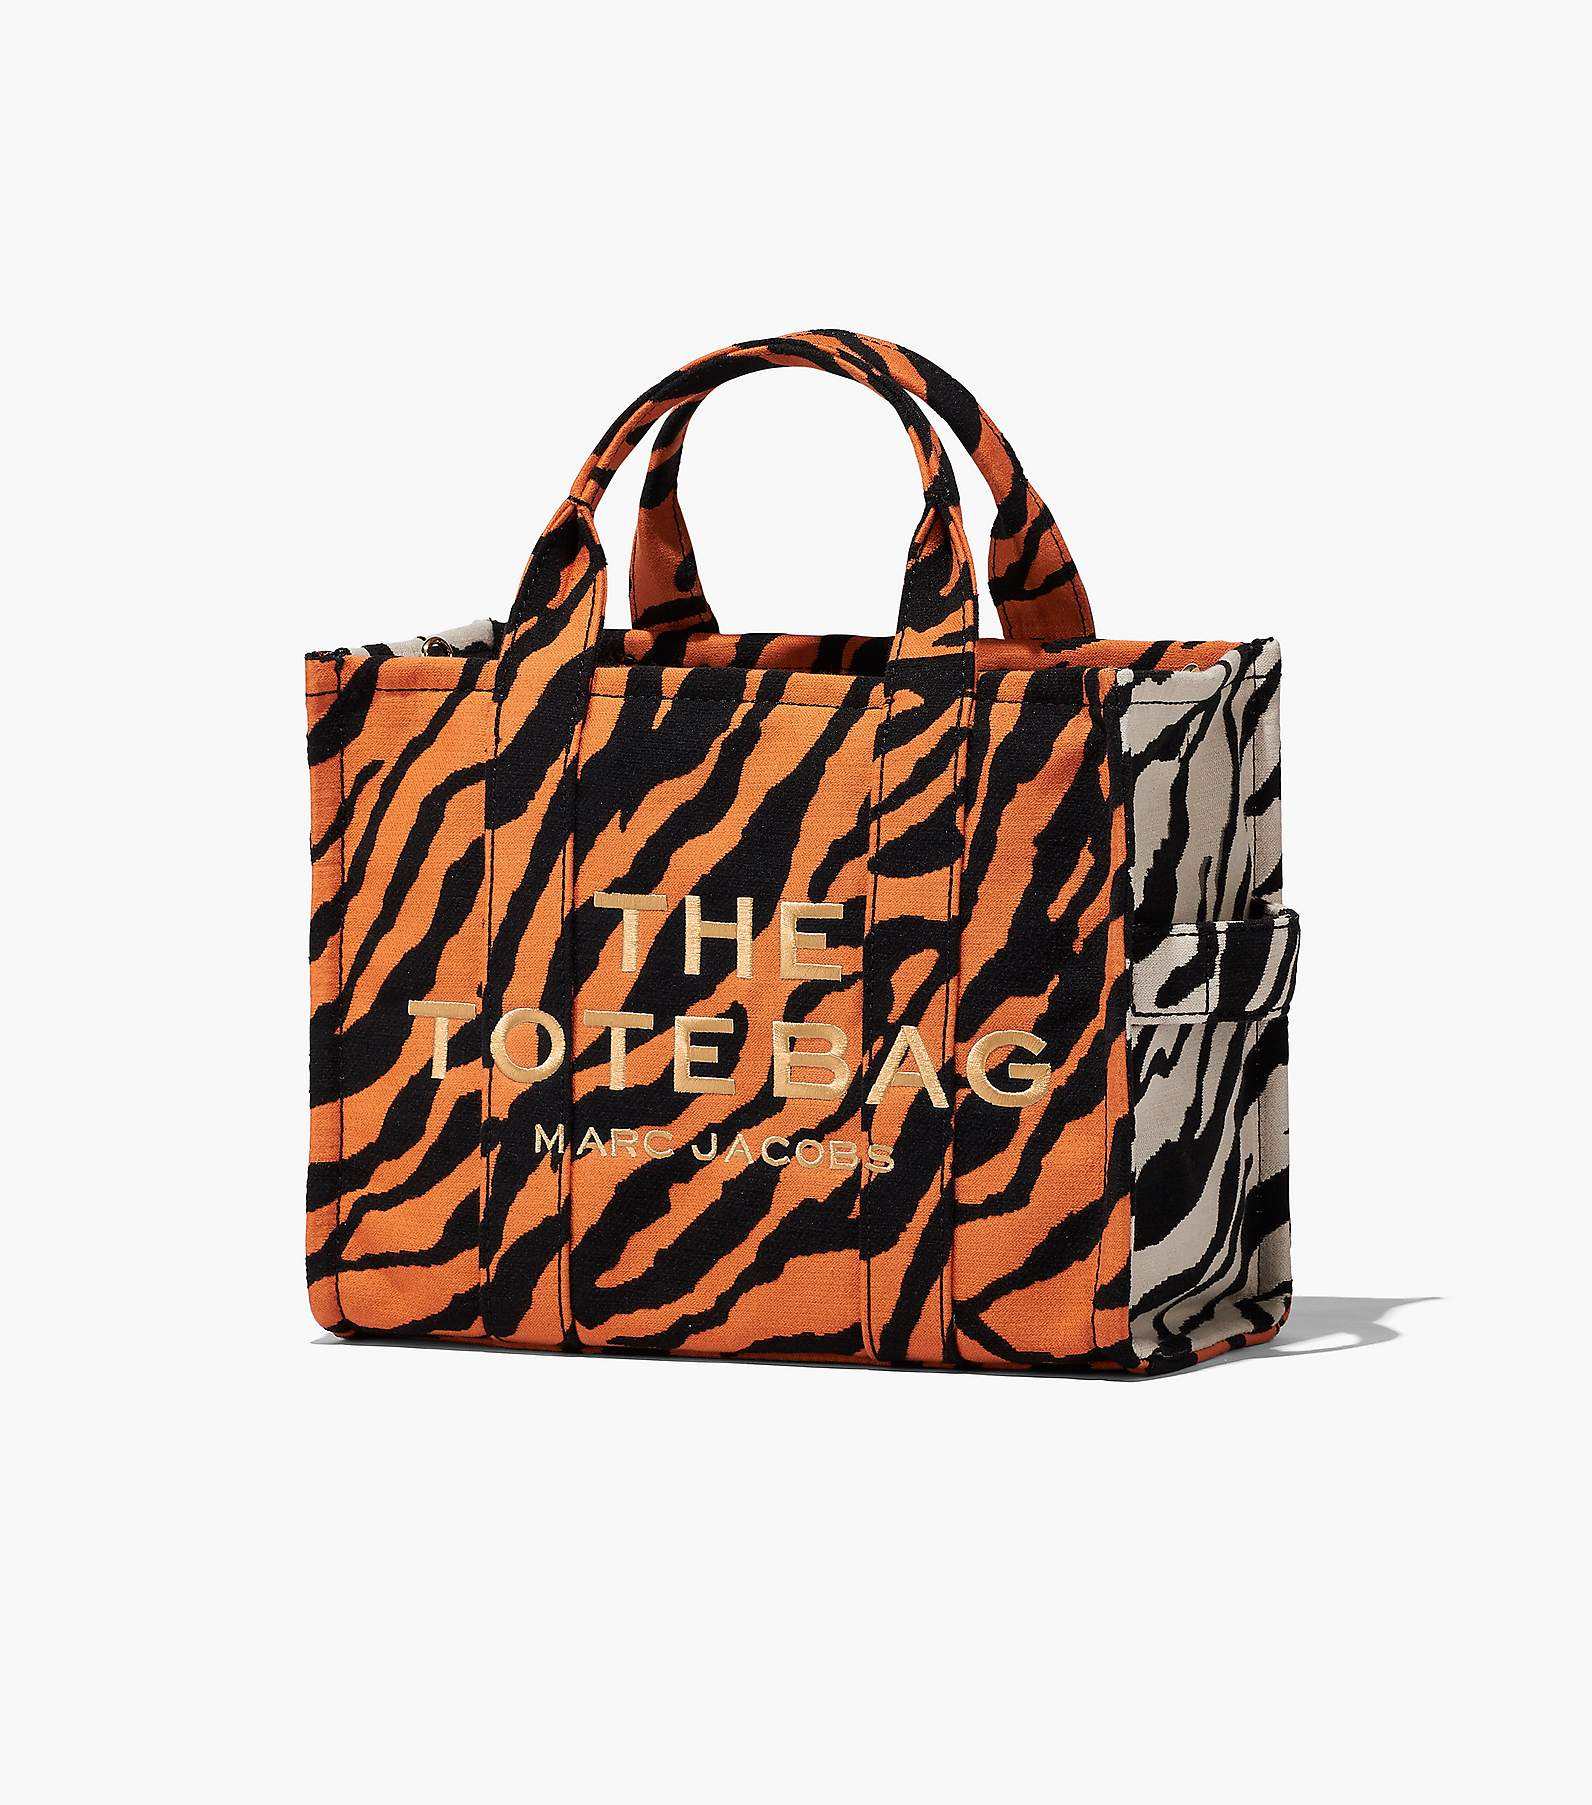 Tiger Shopping Bag 